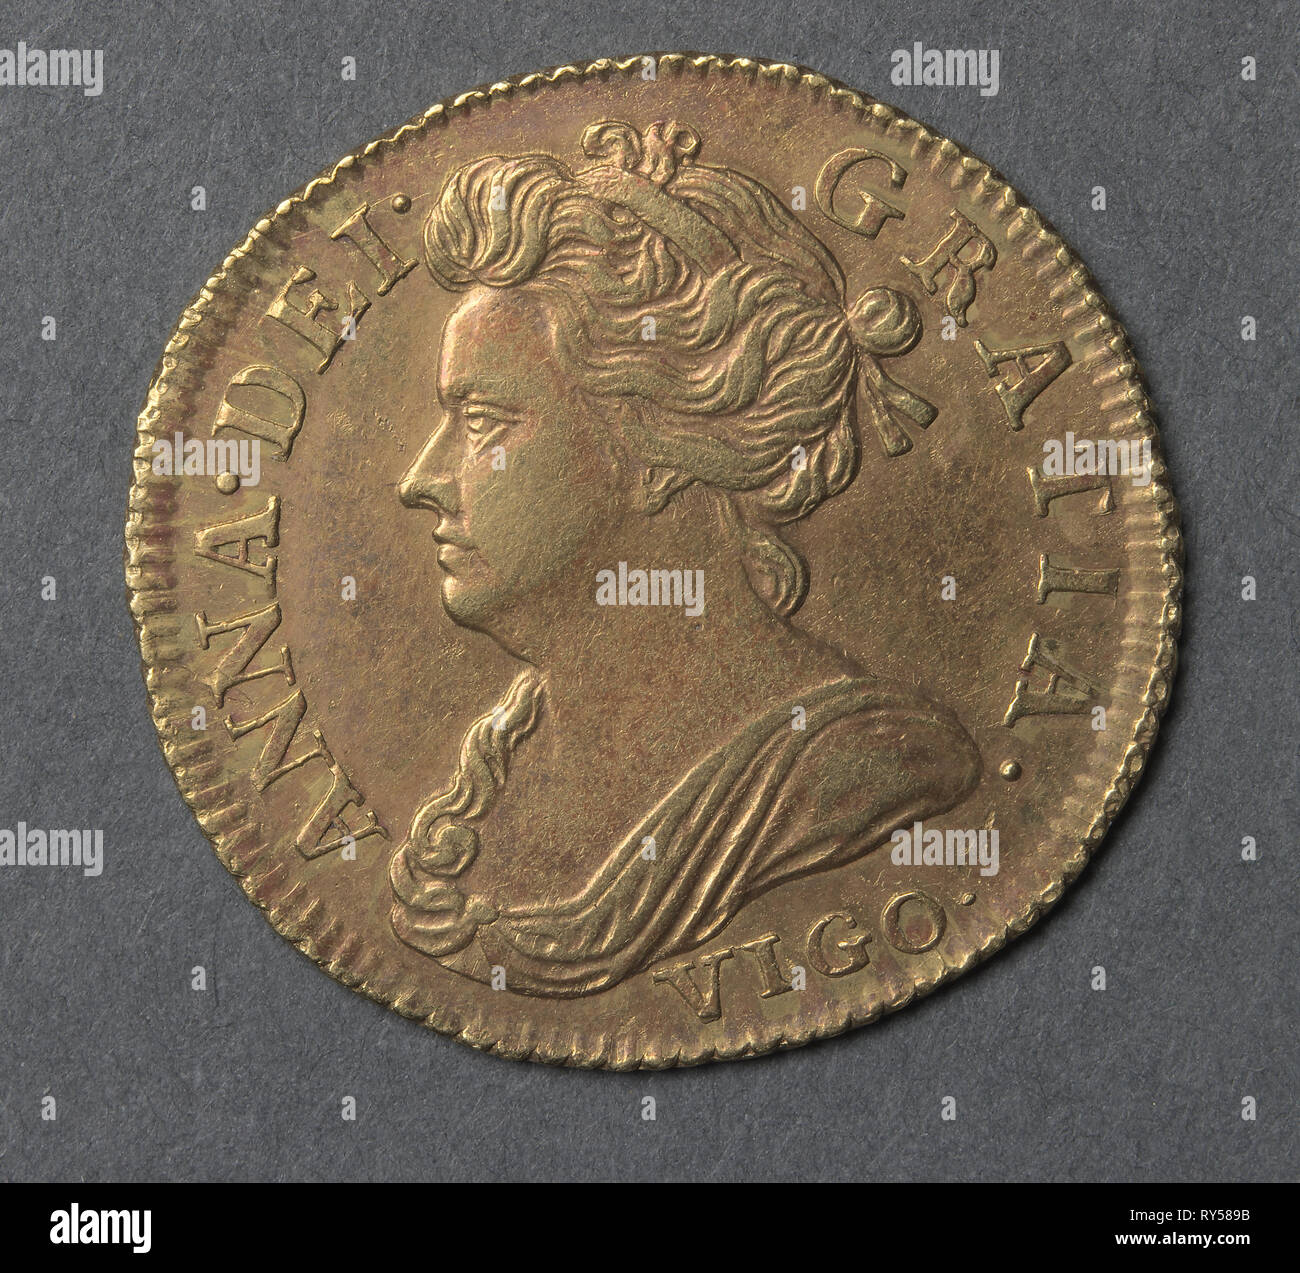 Half Guinea (obverse), 1703. England, Anne, 1702-1714. Gold Stock Photo